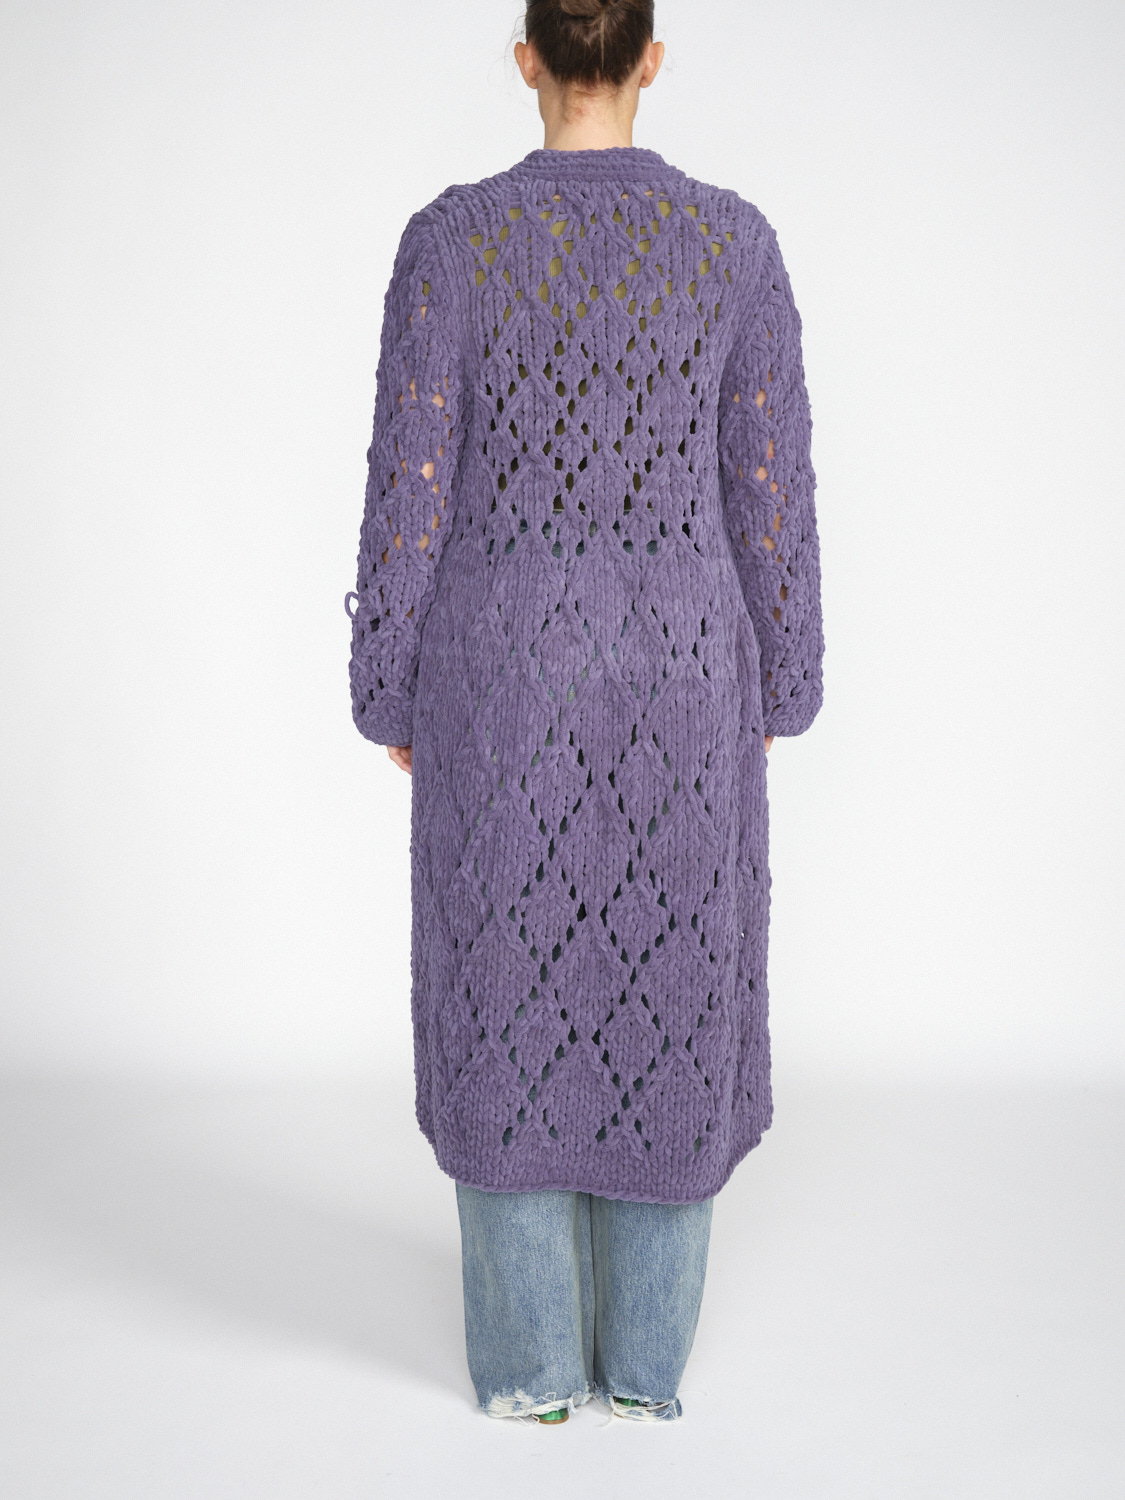 Iris von Arnim chenille cardigan with ajour pattern  lila XS/S